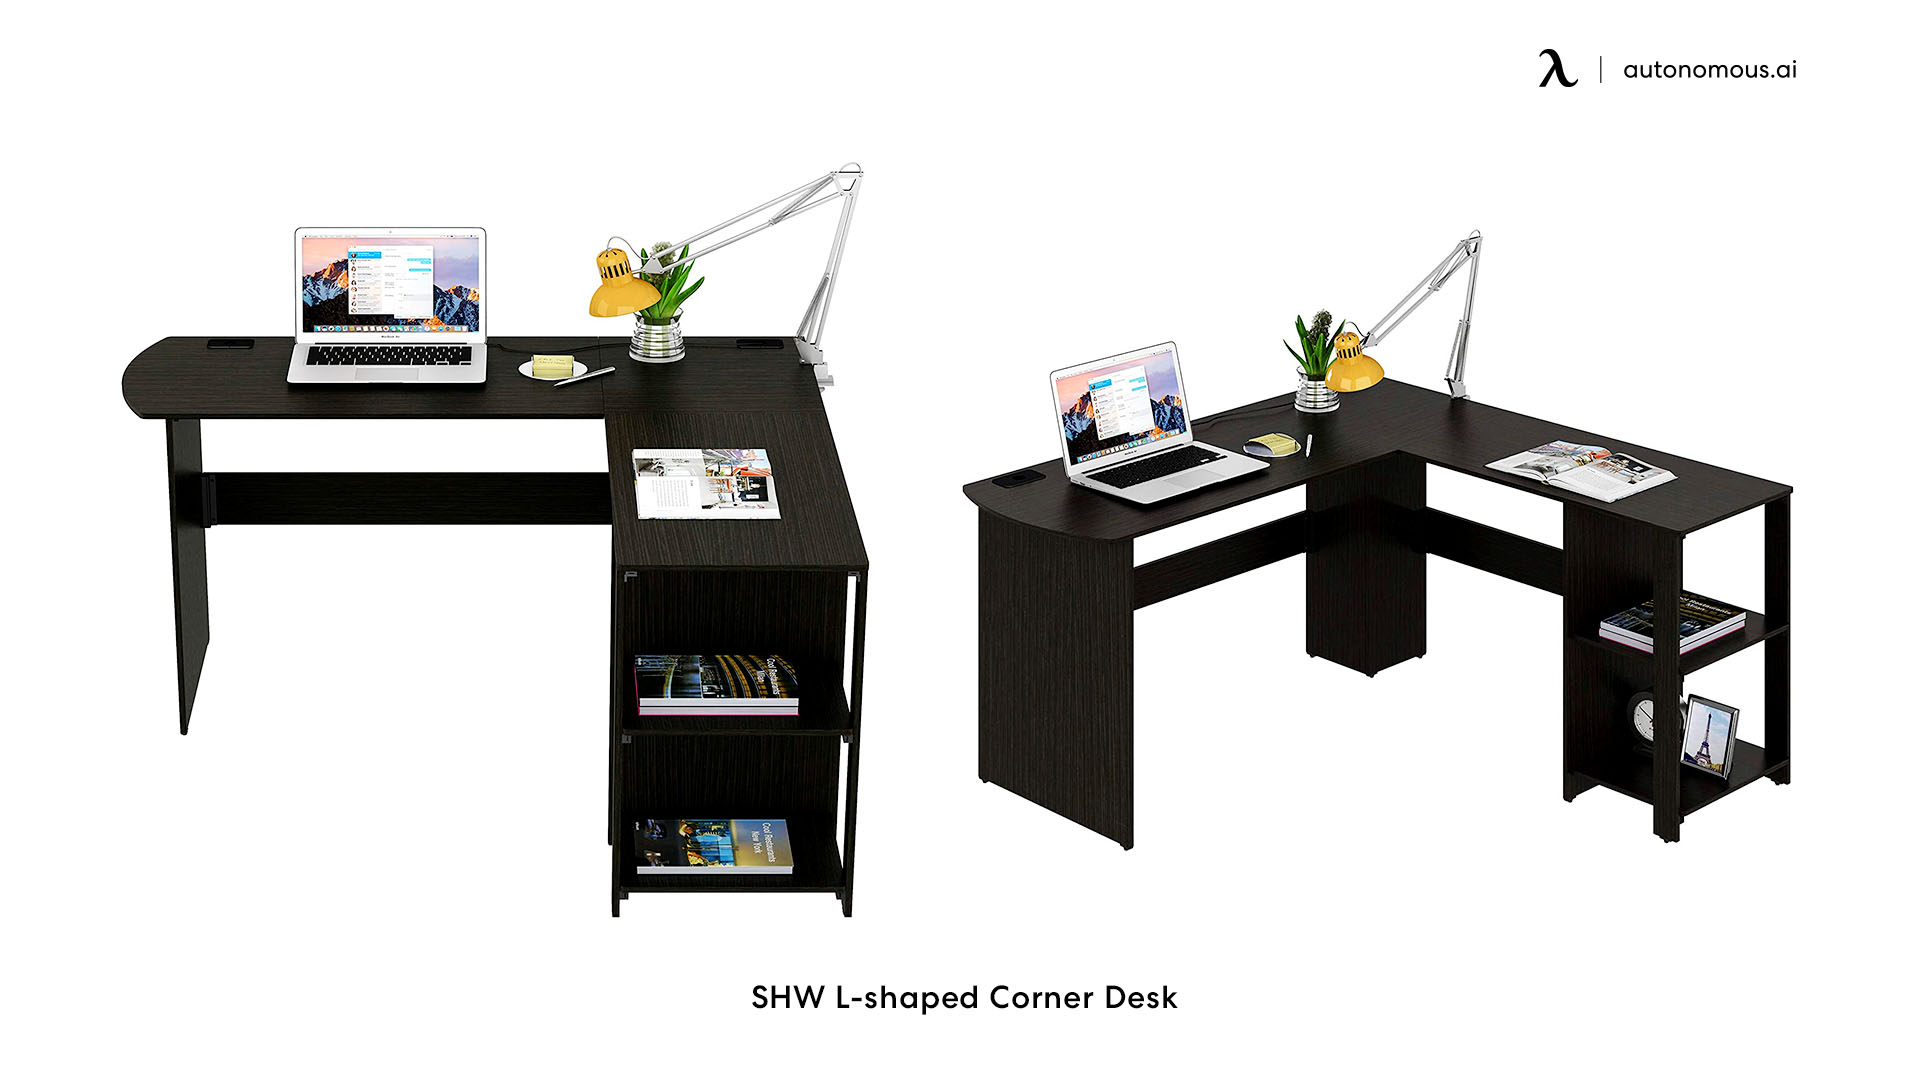 SHW's L-shaped black wood desk